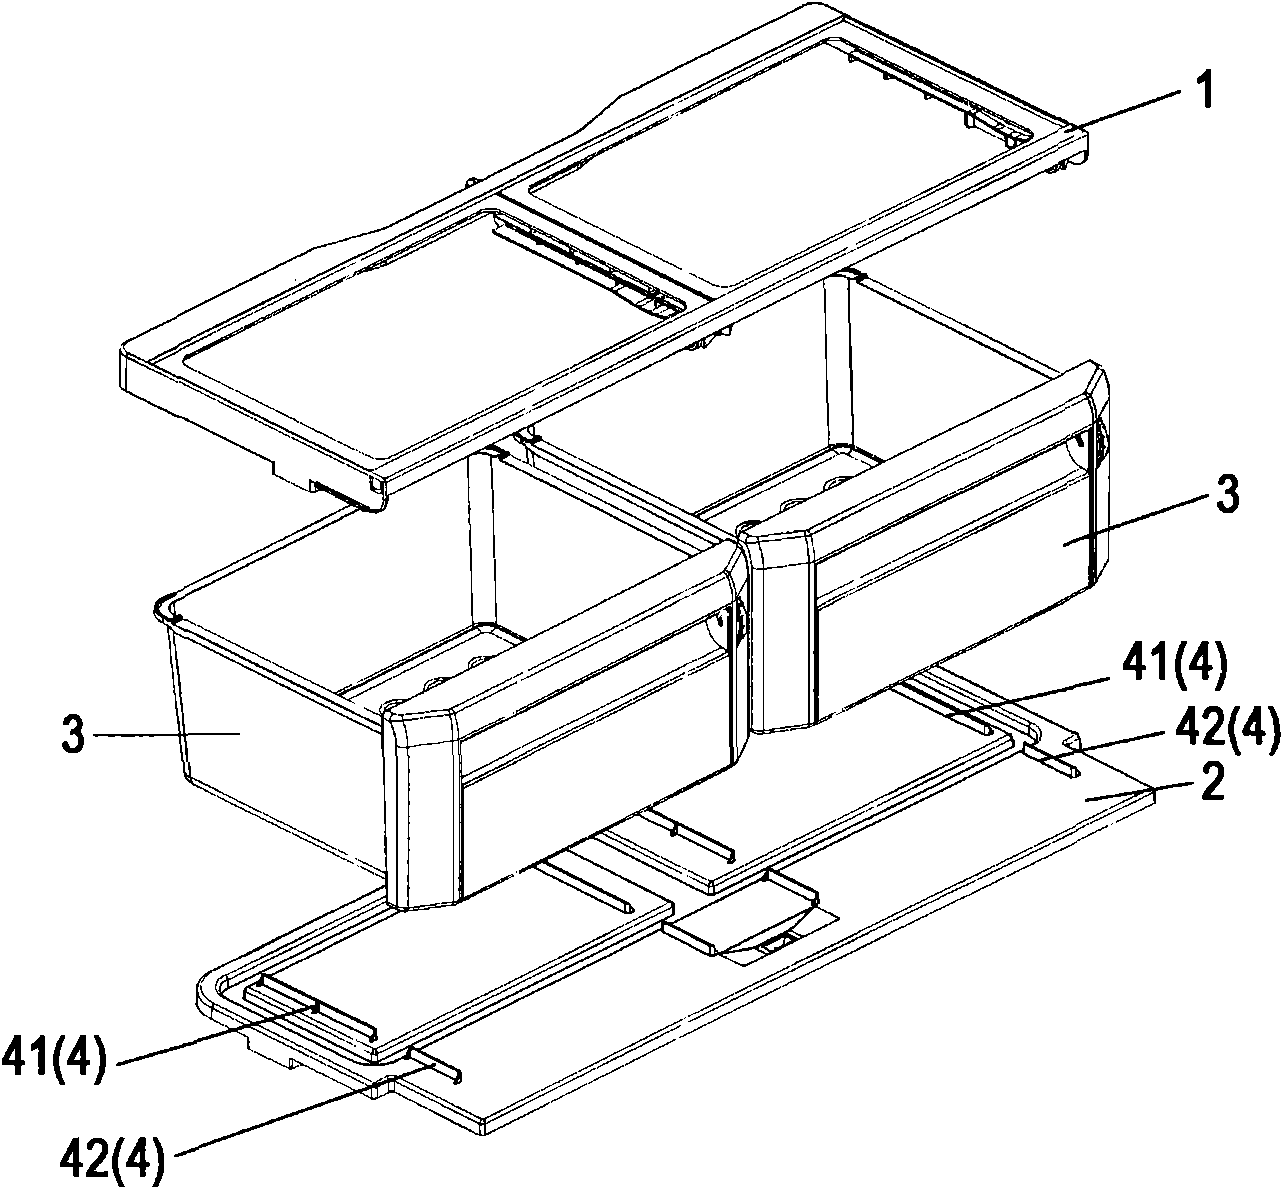 Guide mechanism for storage box of refrigerator